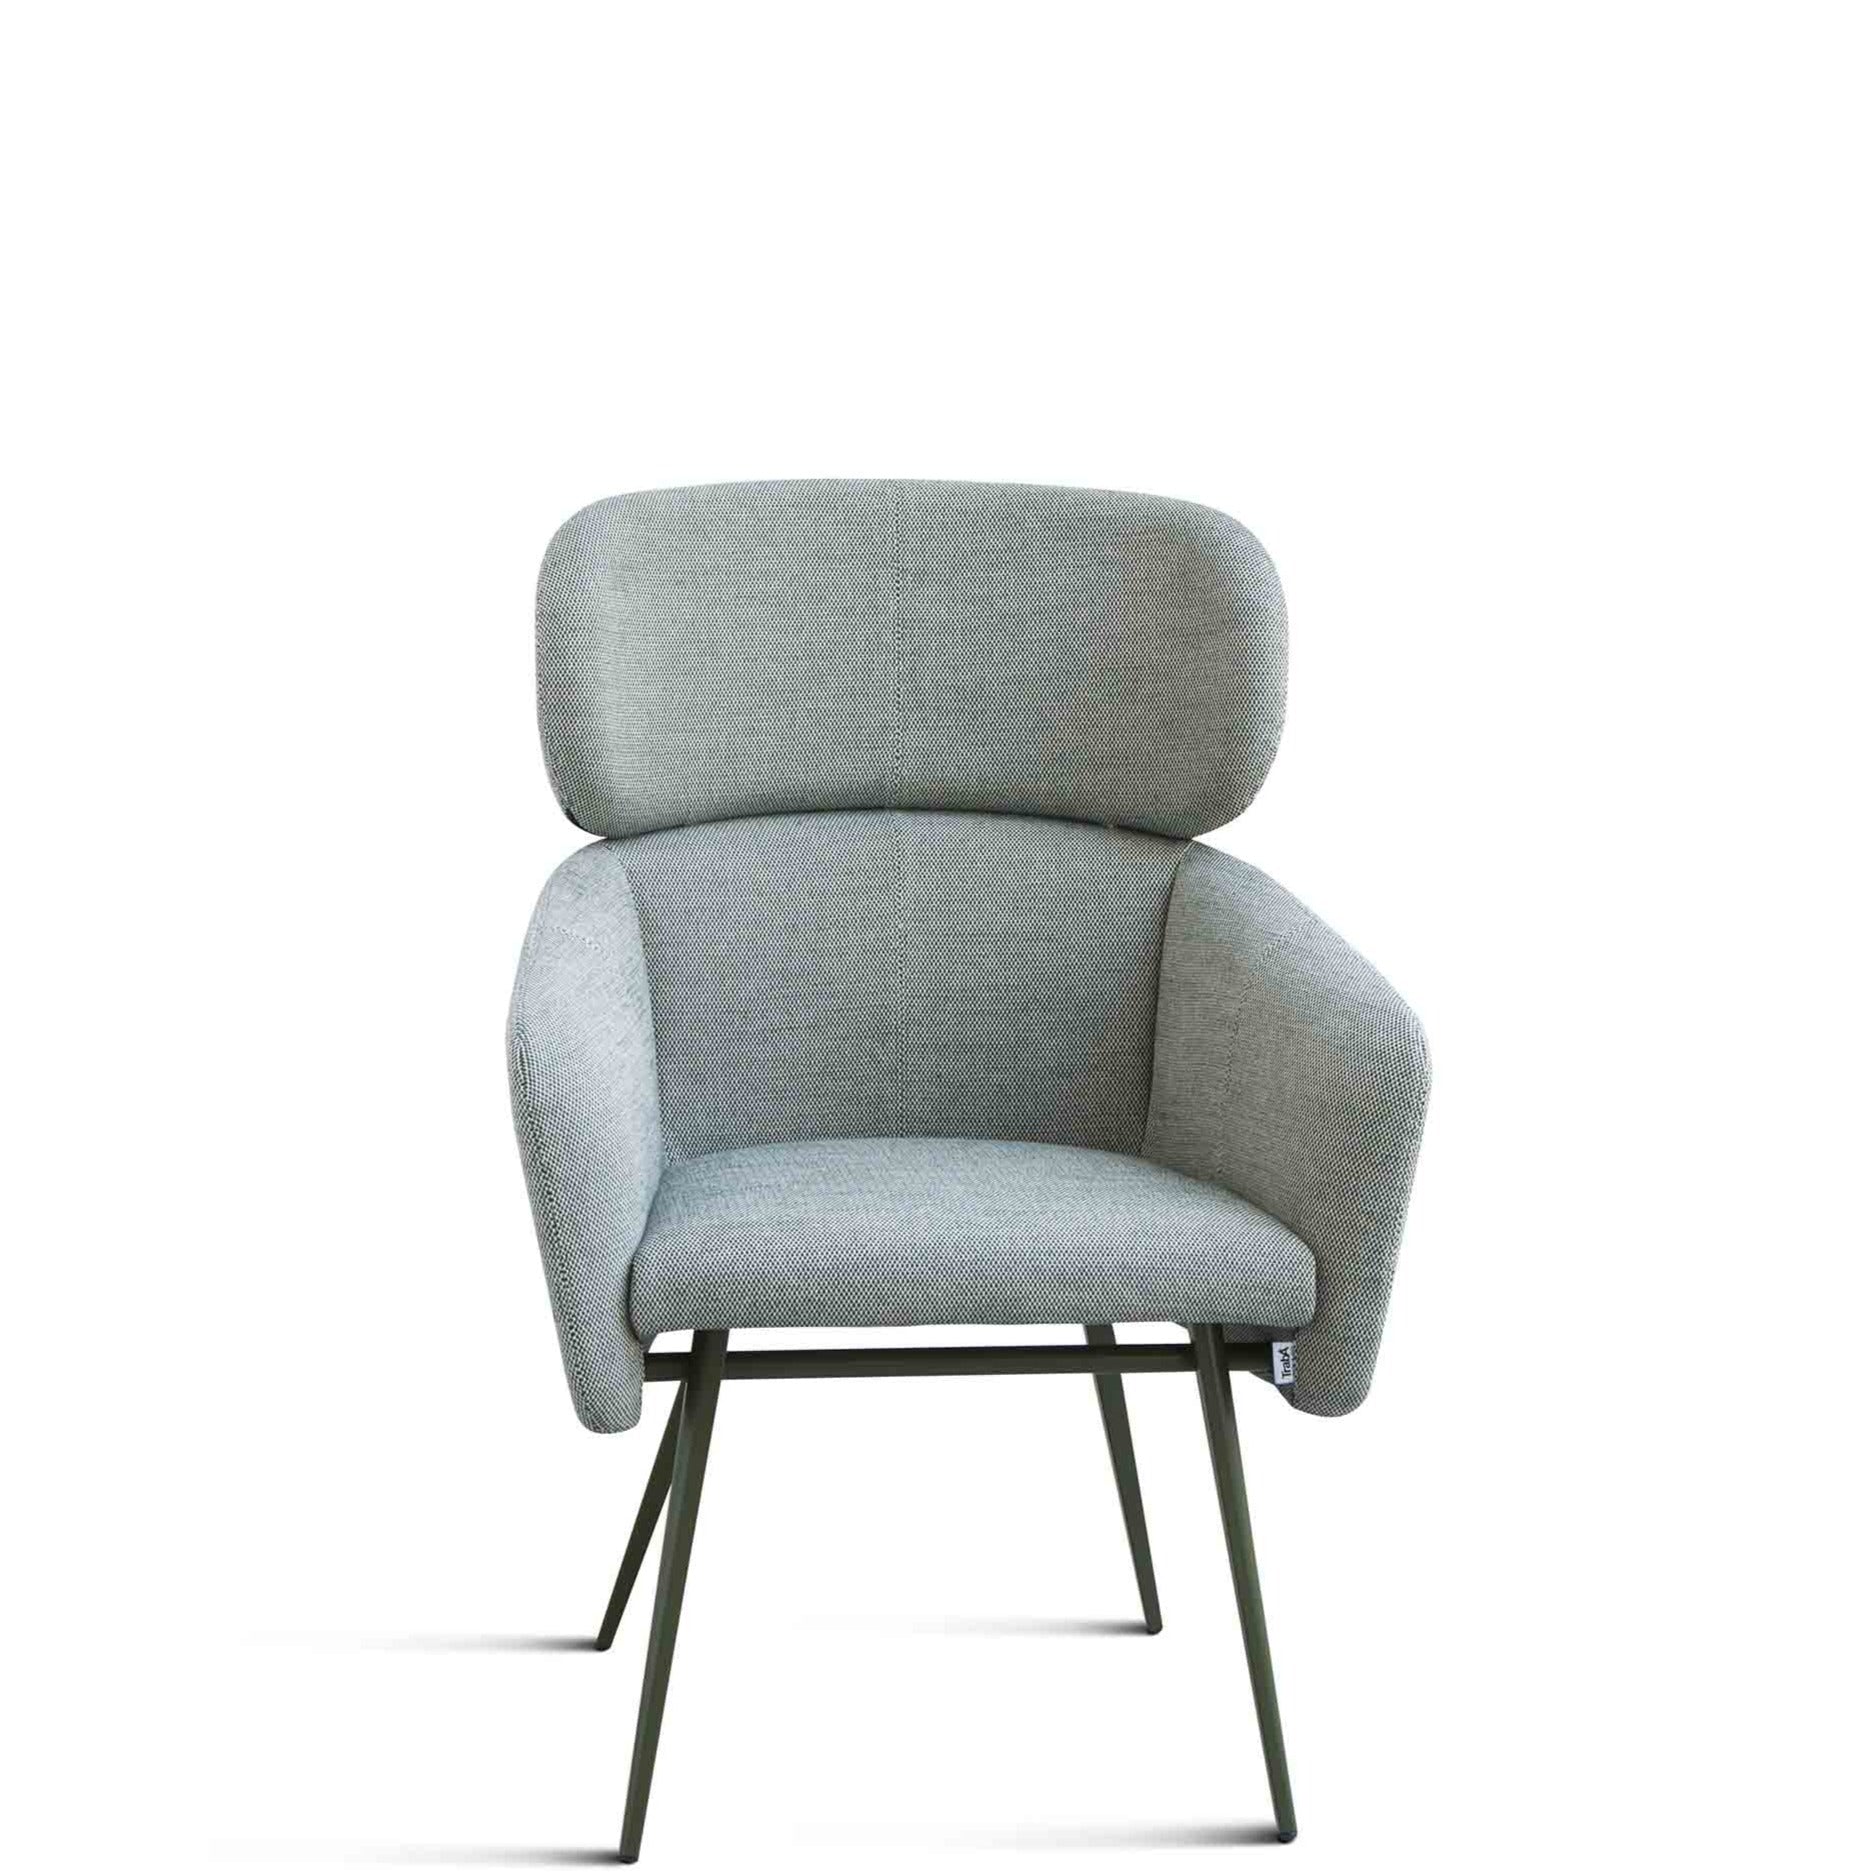 BALU XL MET Armchair grey upholstery colour